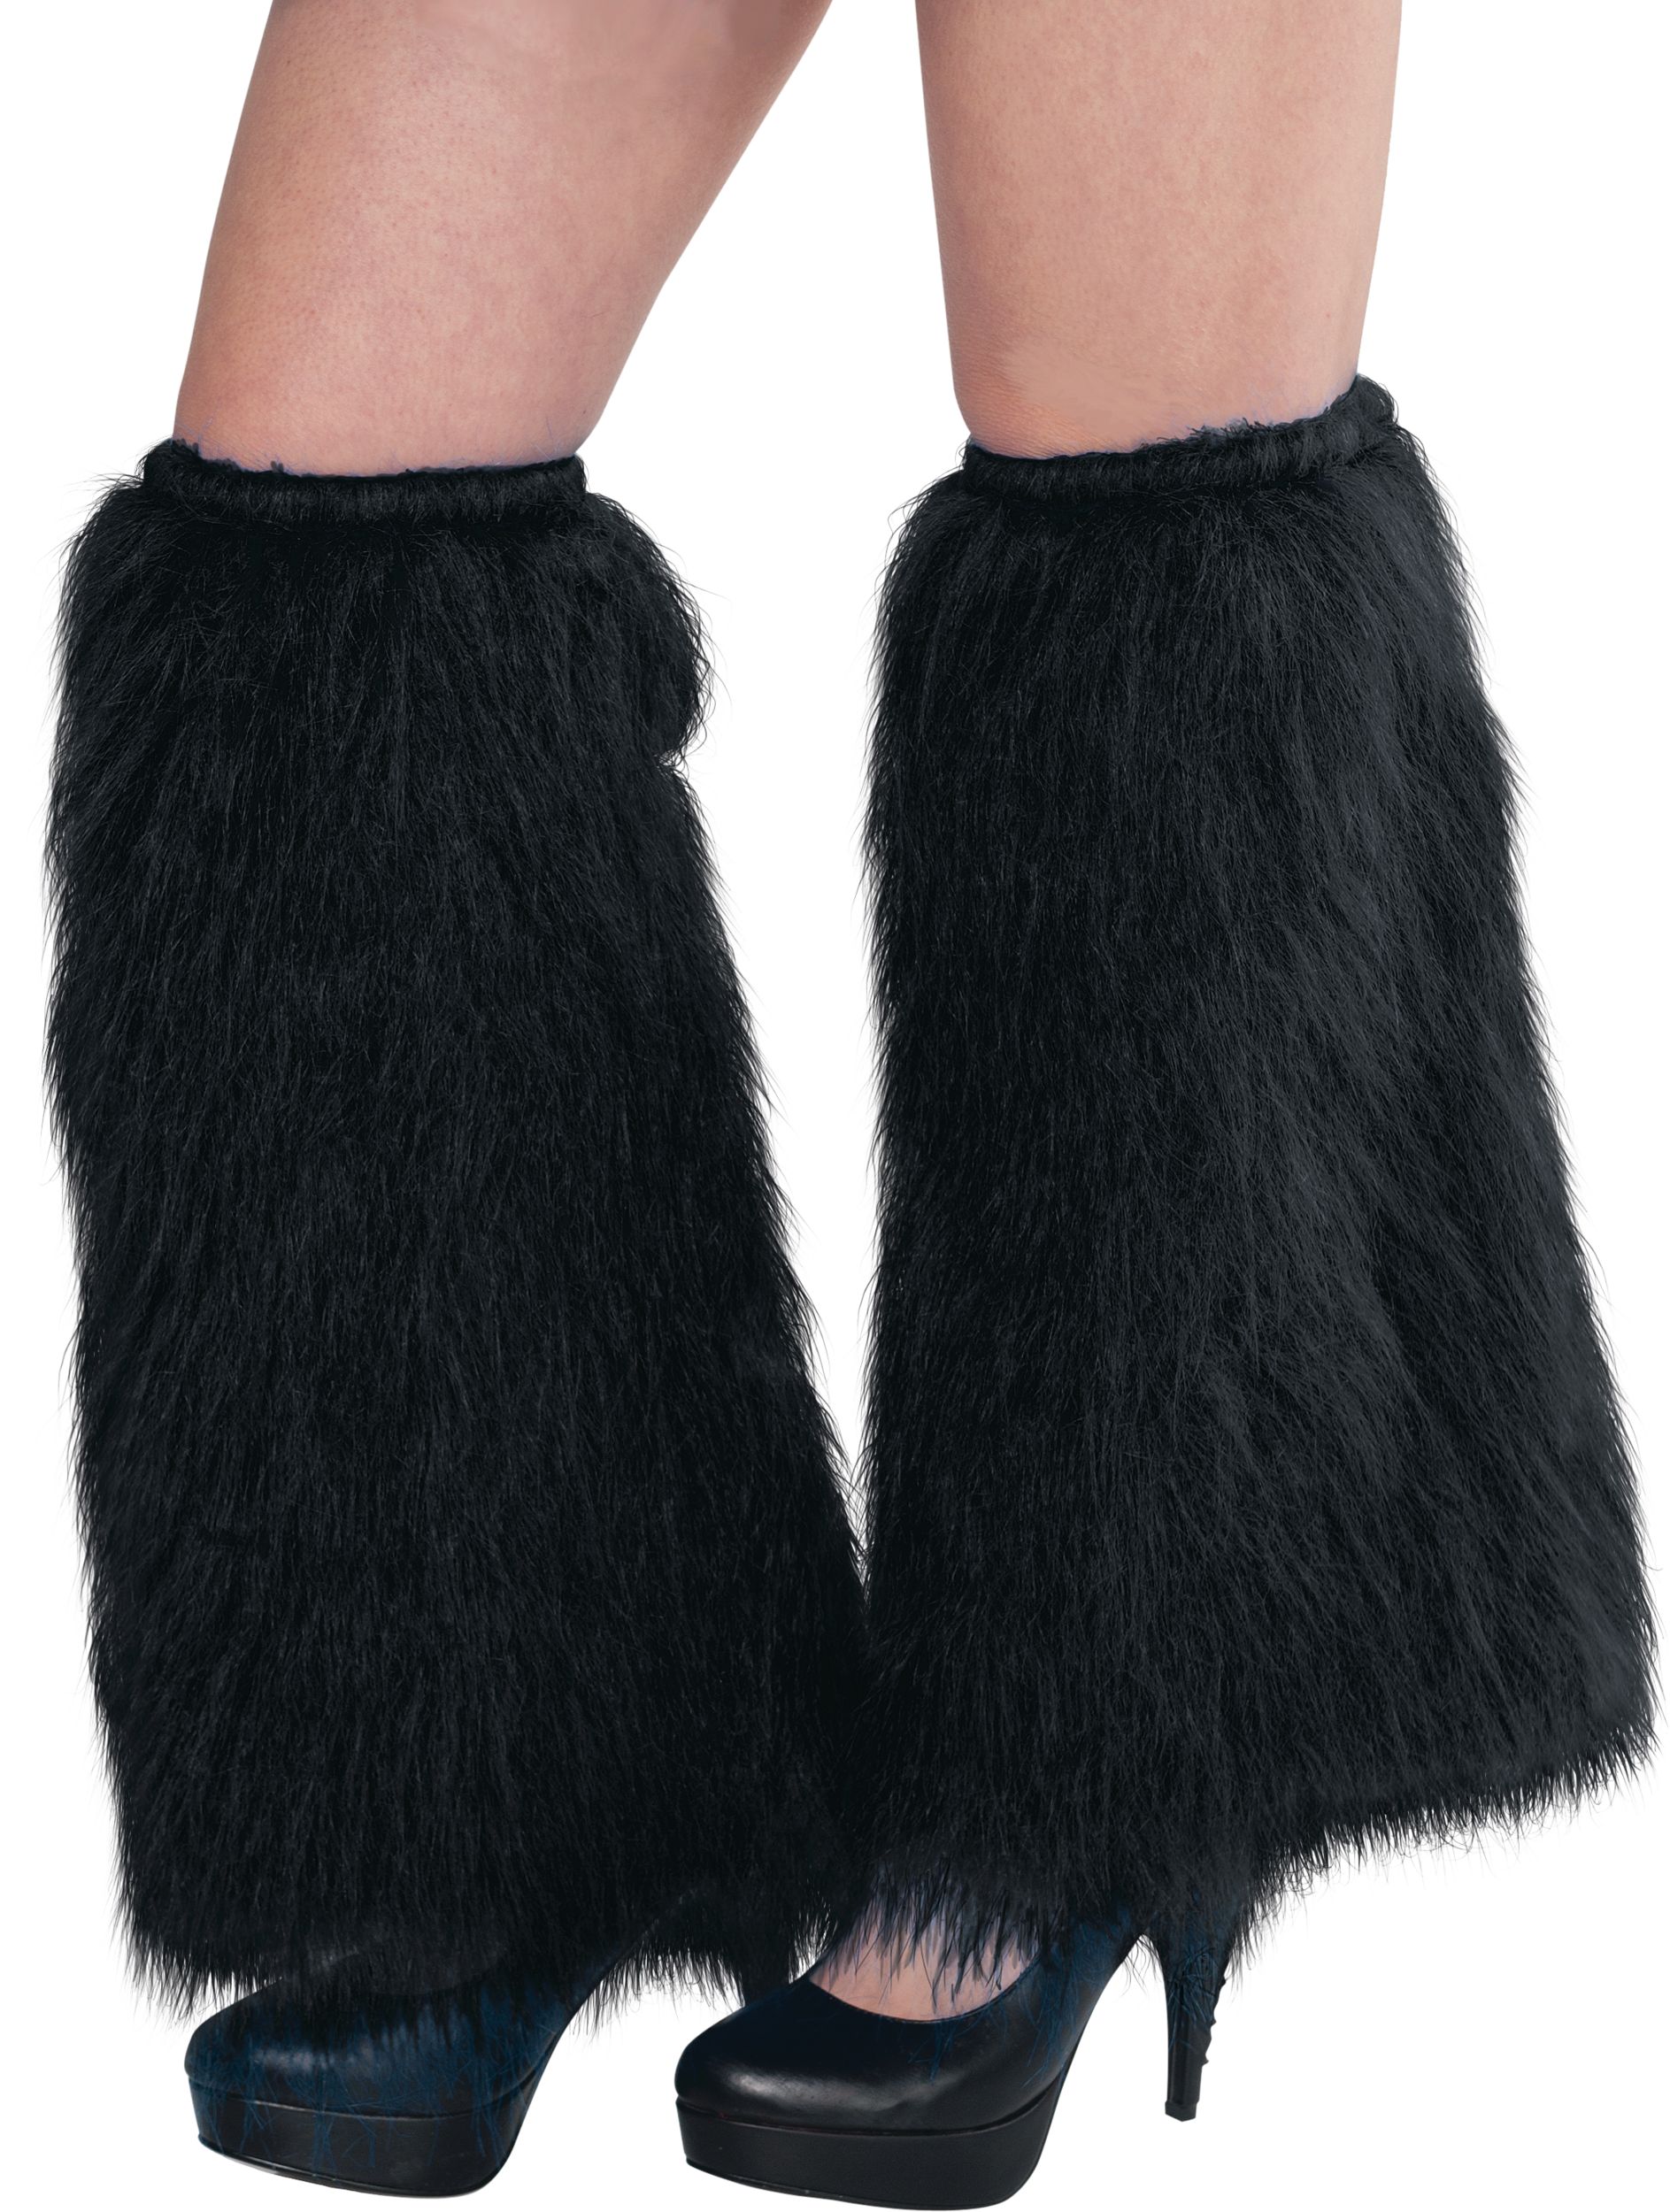  OSPNIEEK Fur Leg Warmers, Furry Leg Warmers for Womens, Faux Fluffy  Leg Warmer, Soft Fuzzy Leg Warmer Boot Cuffs Covers for Winter Warm,  Christmas, Halloween, Cosplay Party (Brown) : Everything Else